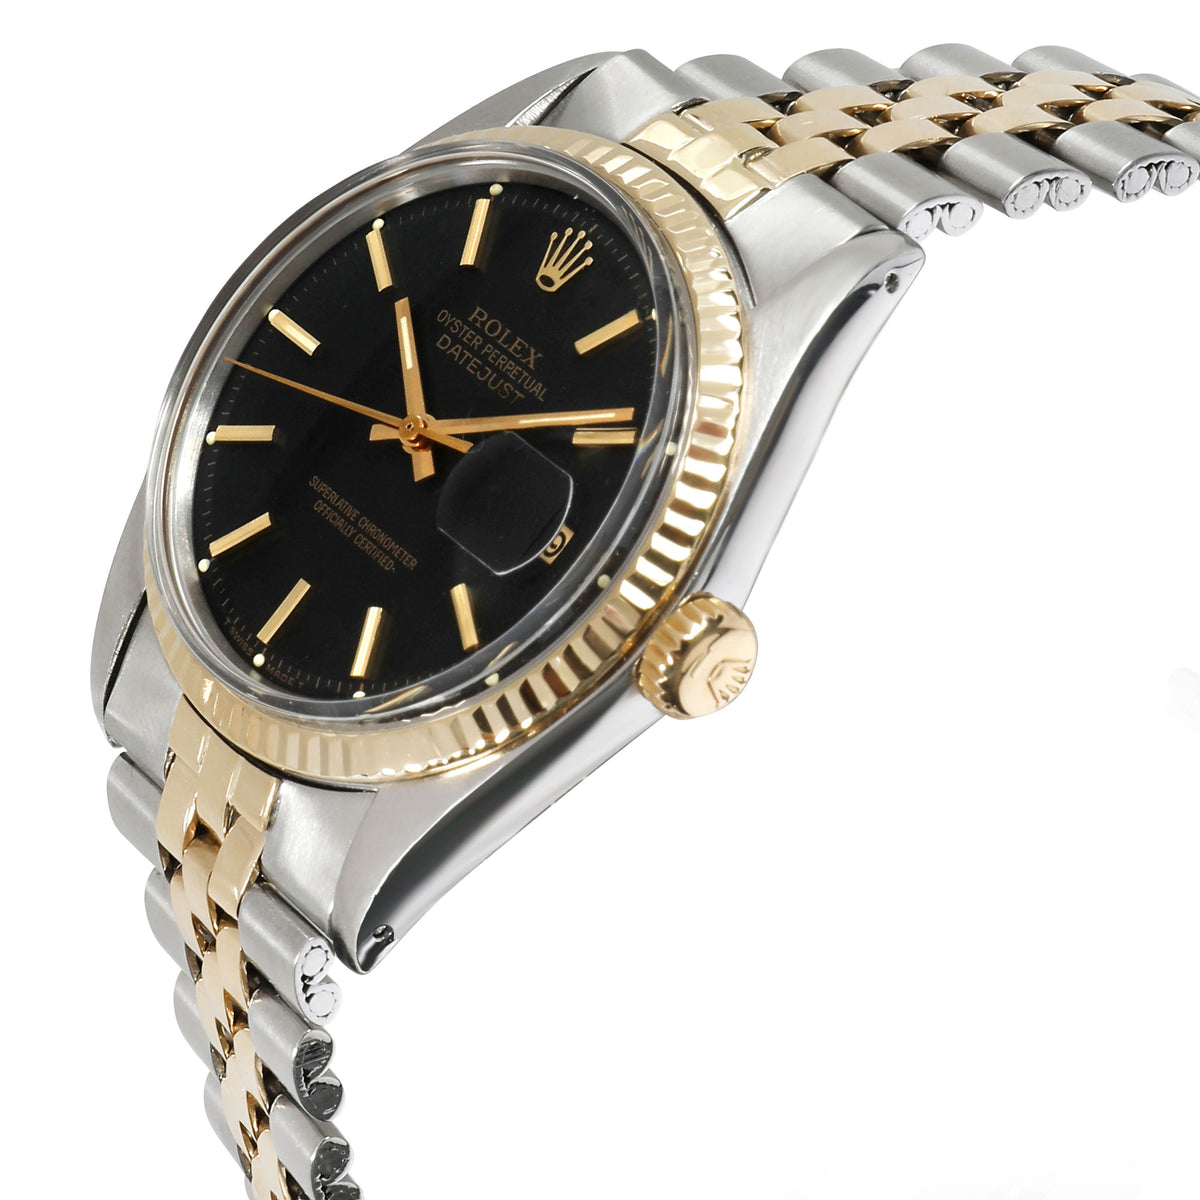 Rolex Datejust 1601 Men's Watch in 14kt Stainless Steel/Yellow Gold